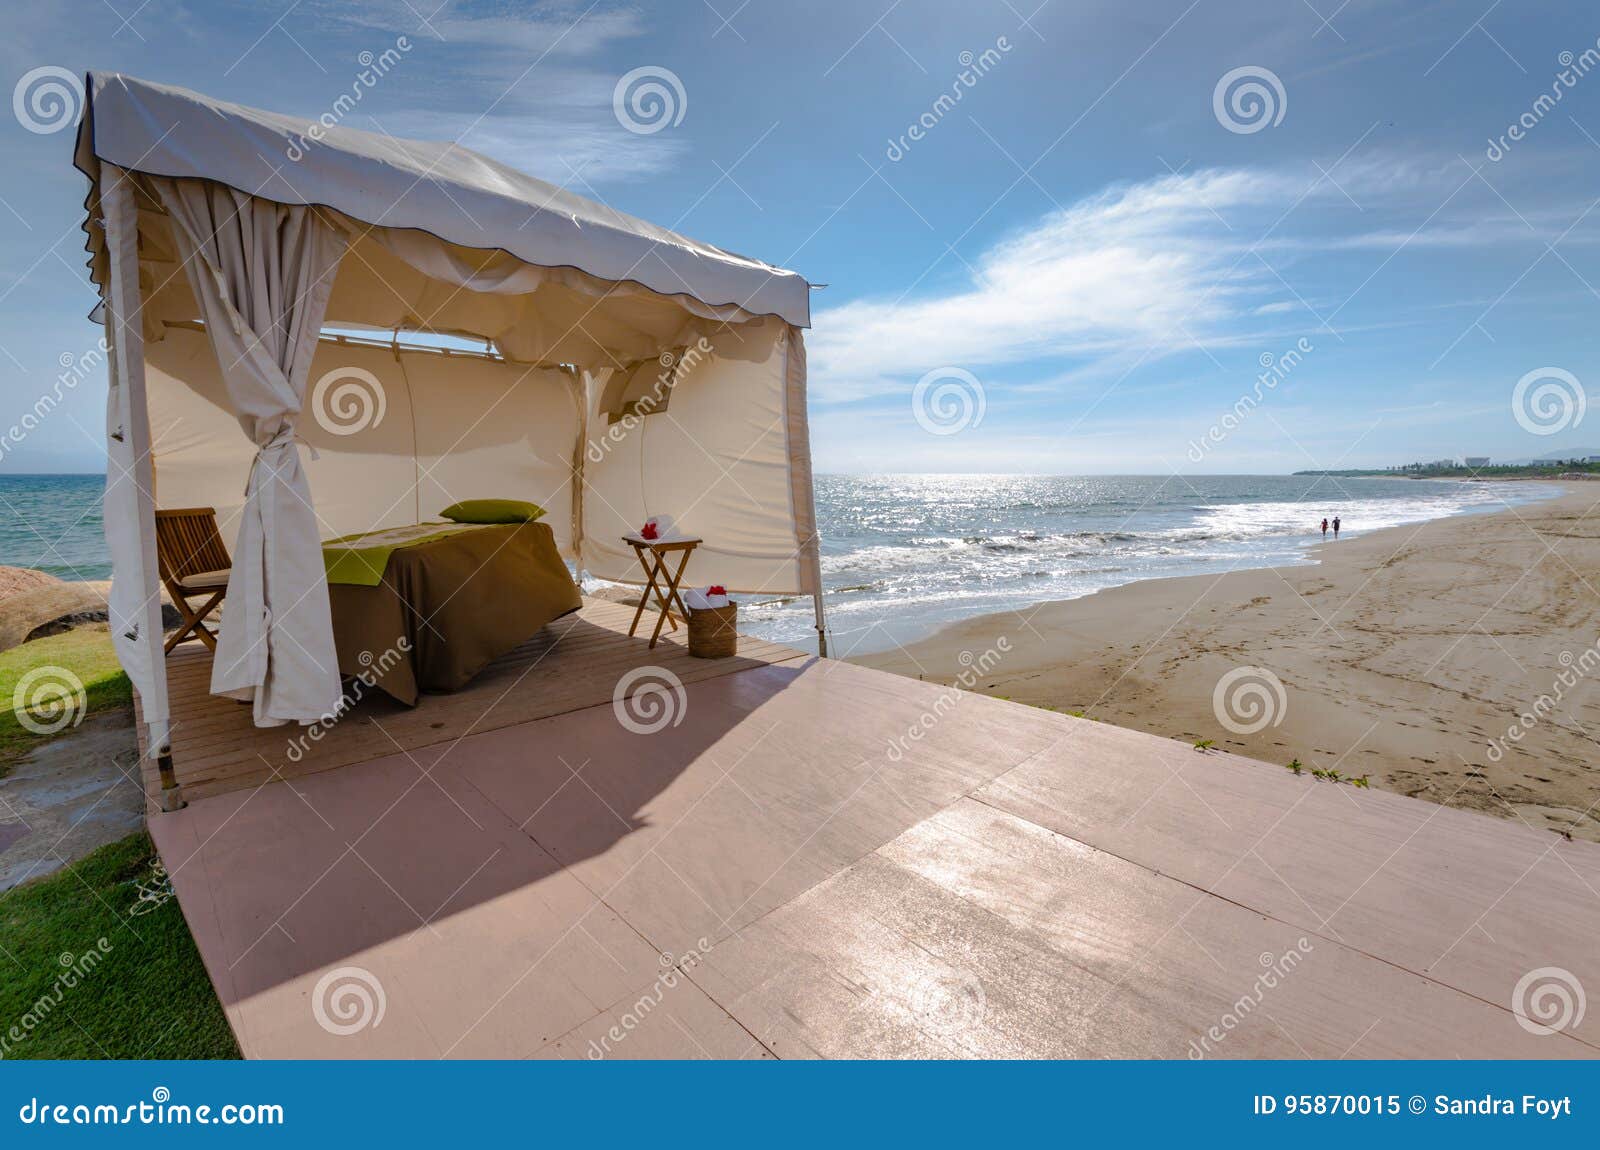 beach spa cabana